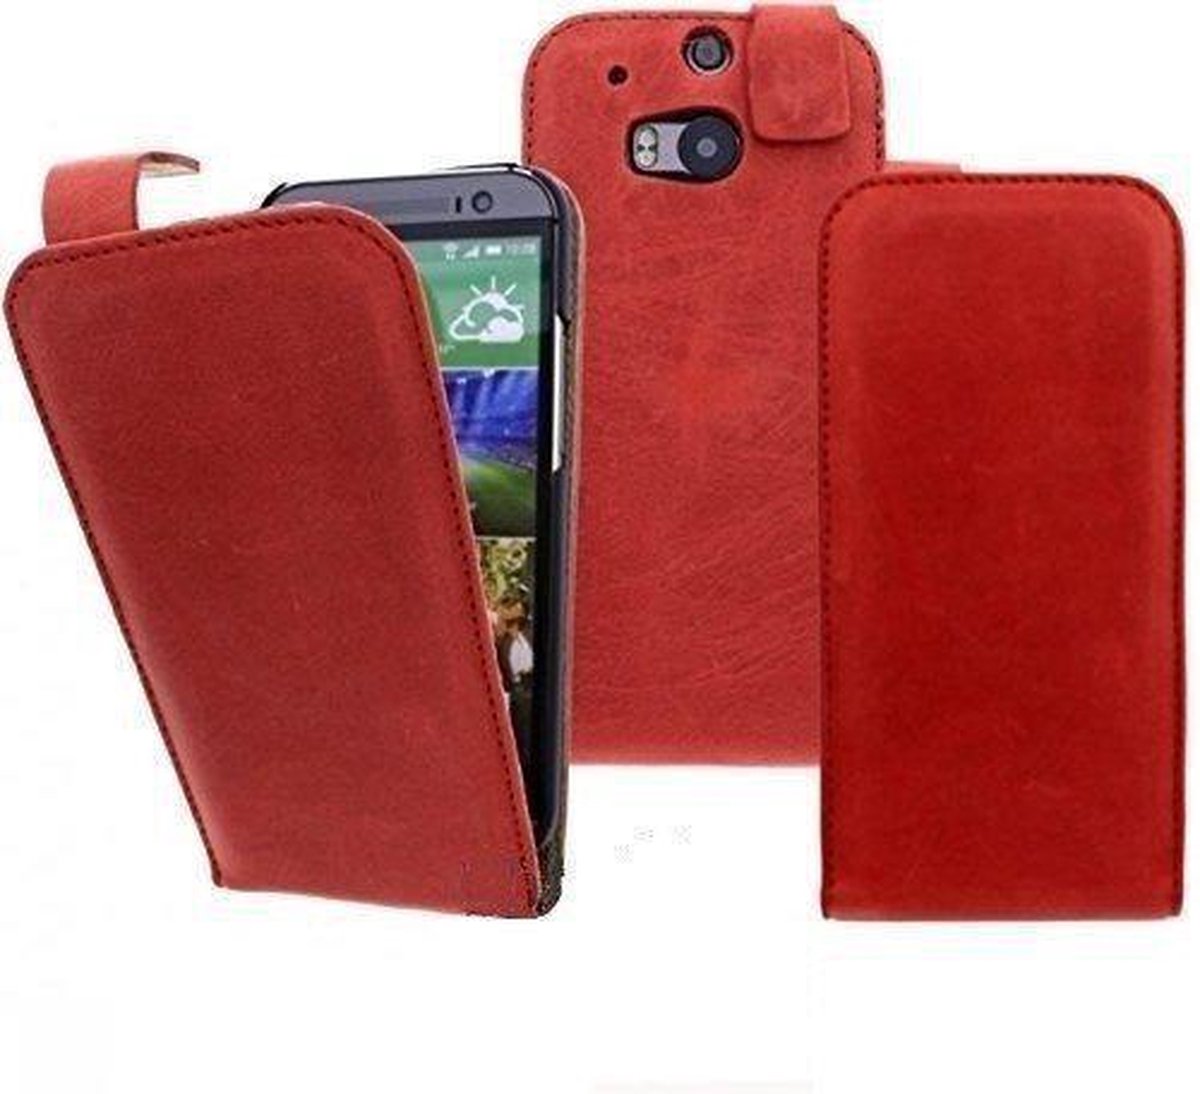 Devills Crazy Lederen Flip Case HTC One M8 Hoesje Crazy Red